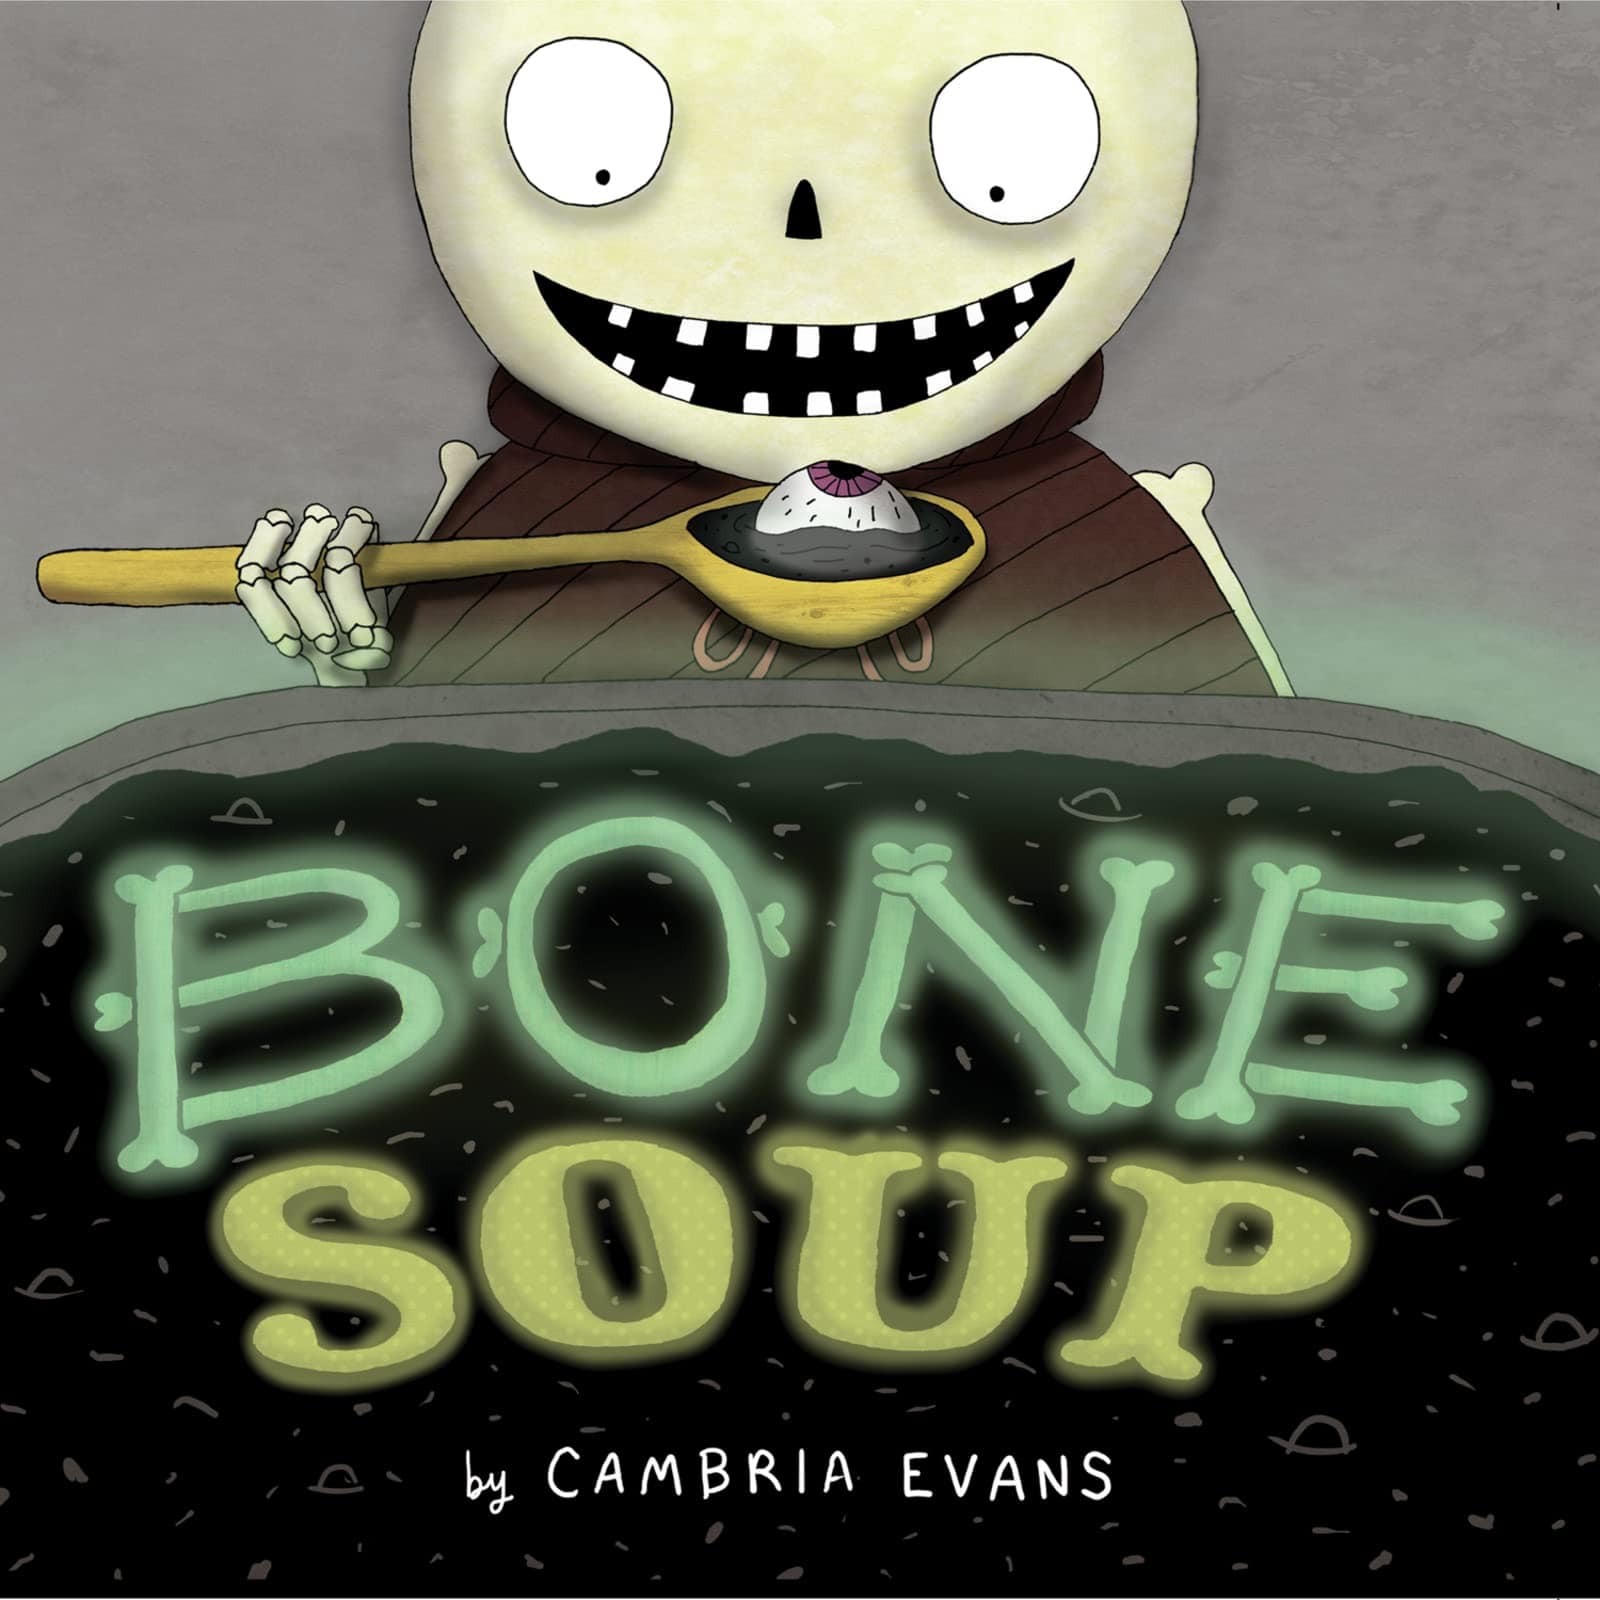 "Bone Soup" by Cambria Evans